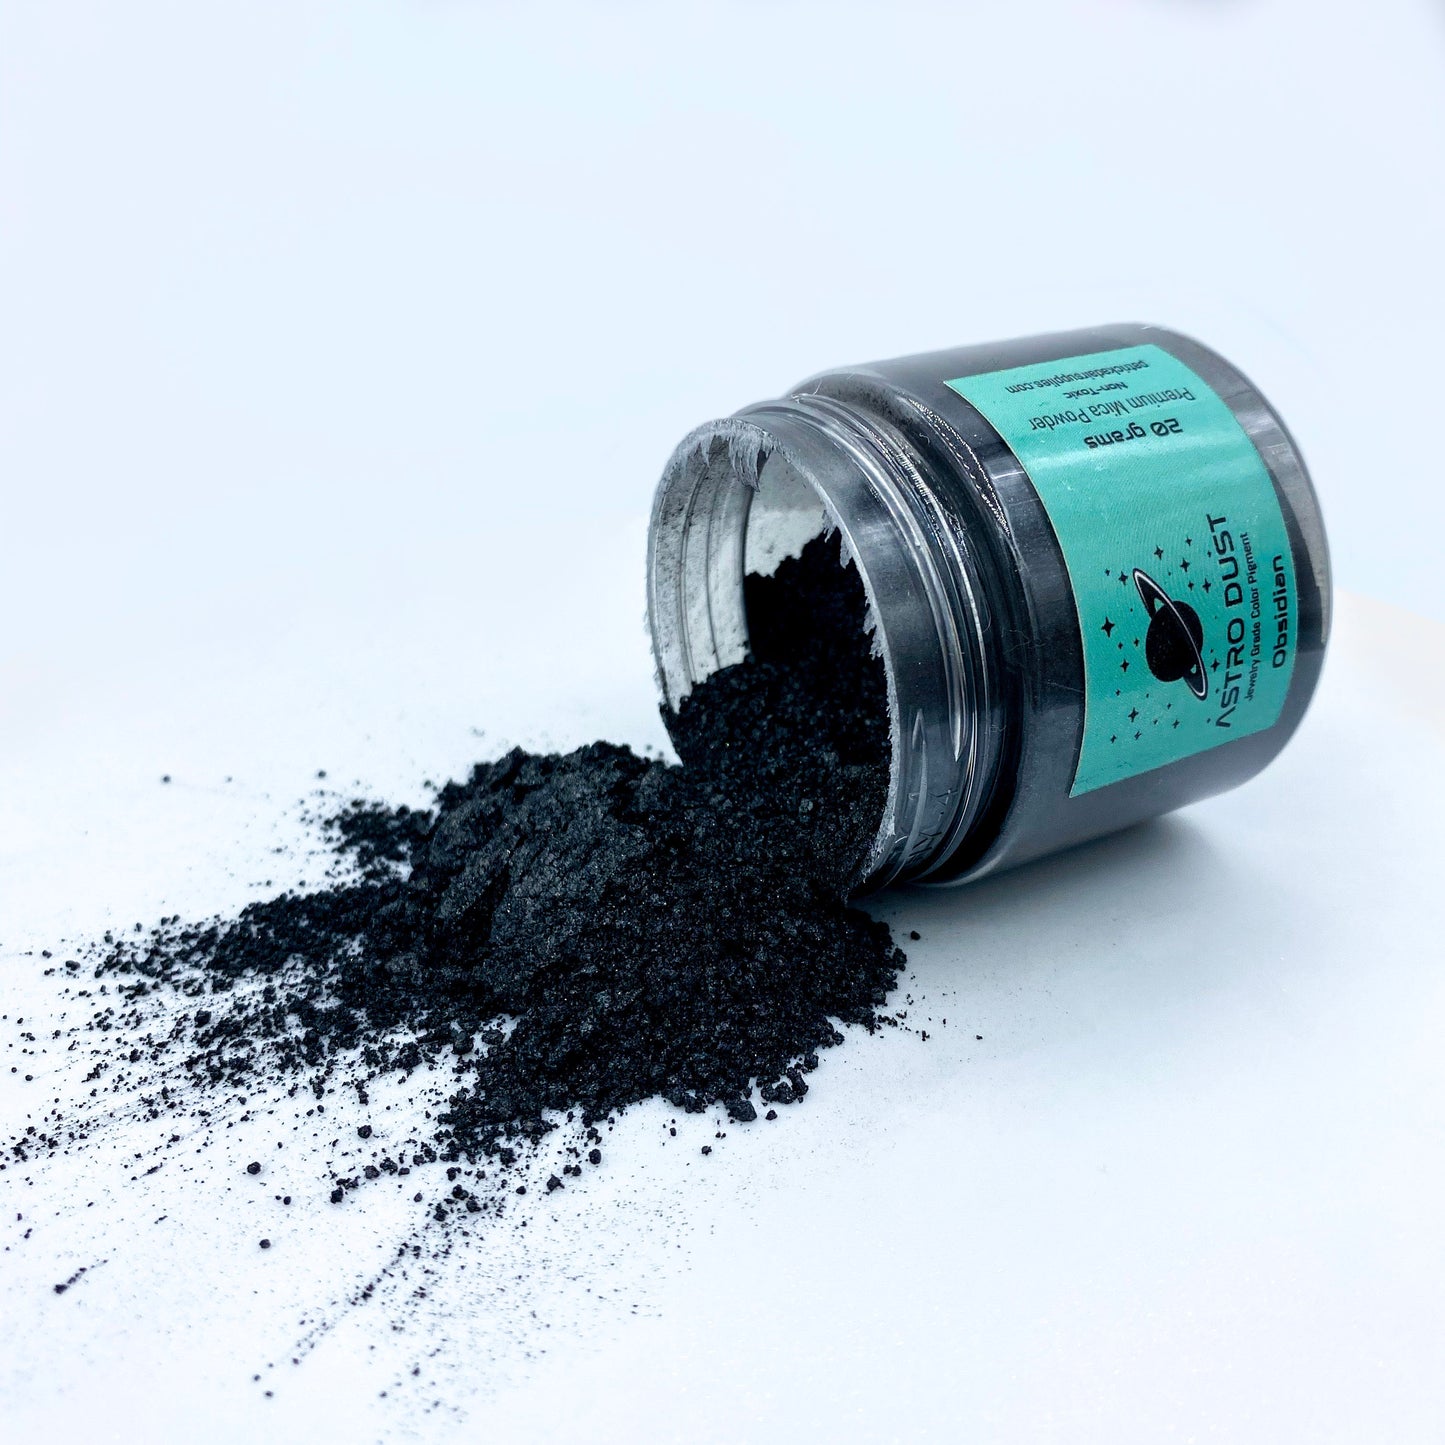 Astro Dust Black Obsidian Color Pigment - Patrick Adair Supplies